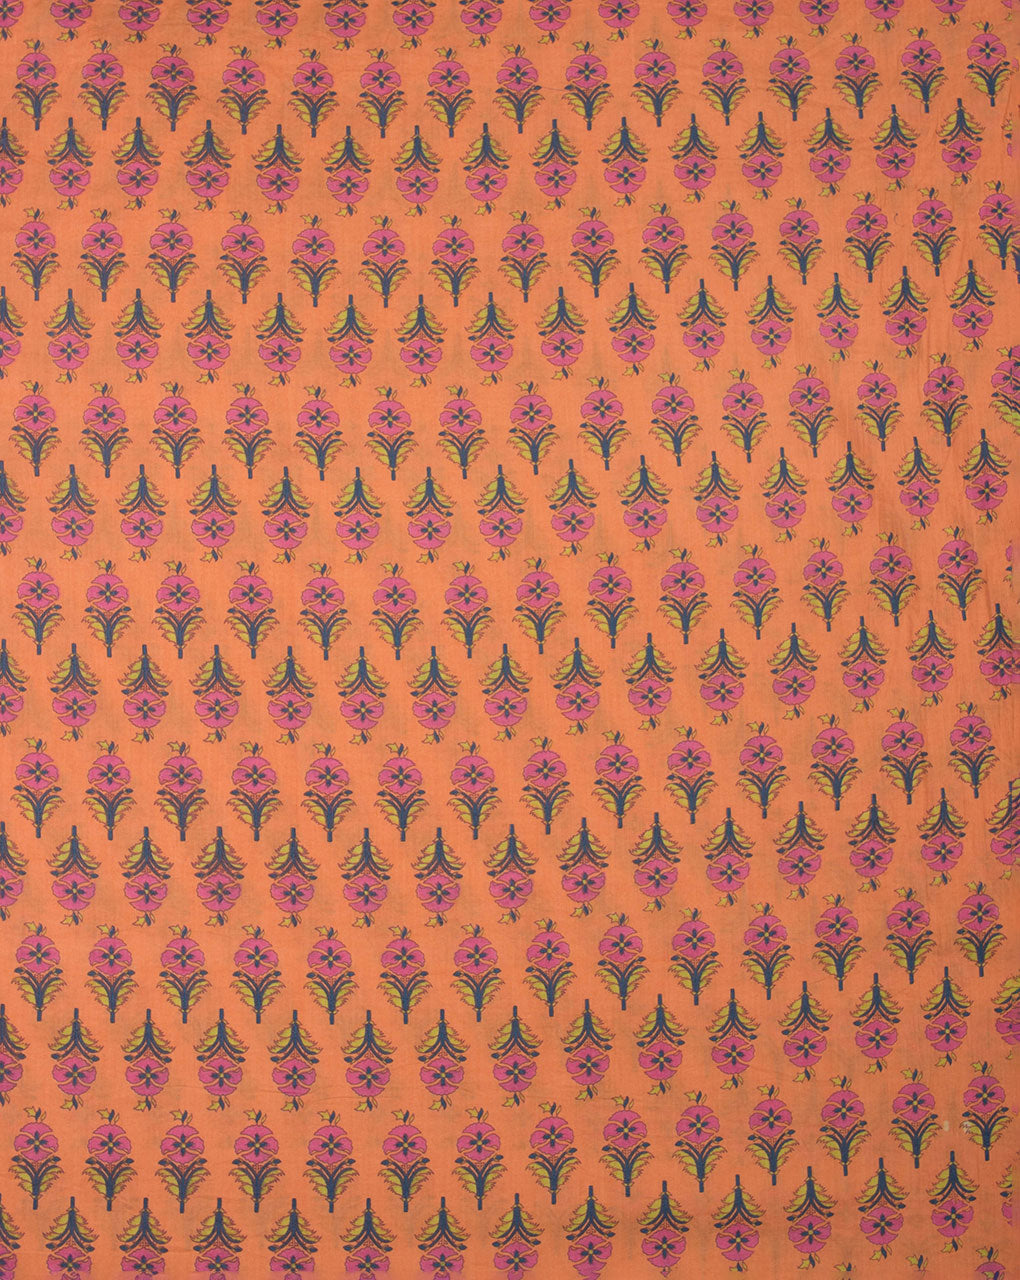 Foil Screen Print Cotton Fabric ( Width 54 Inch ) - Fabriclore.com